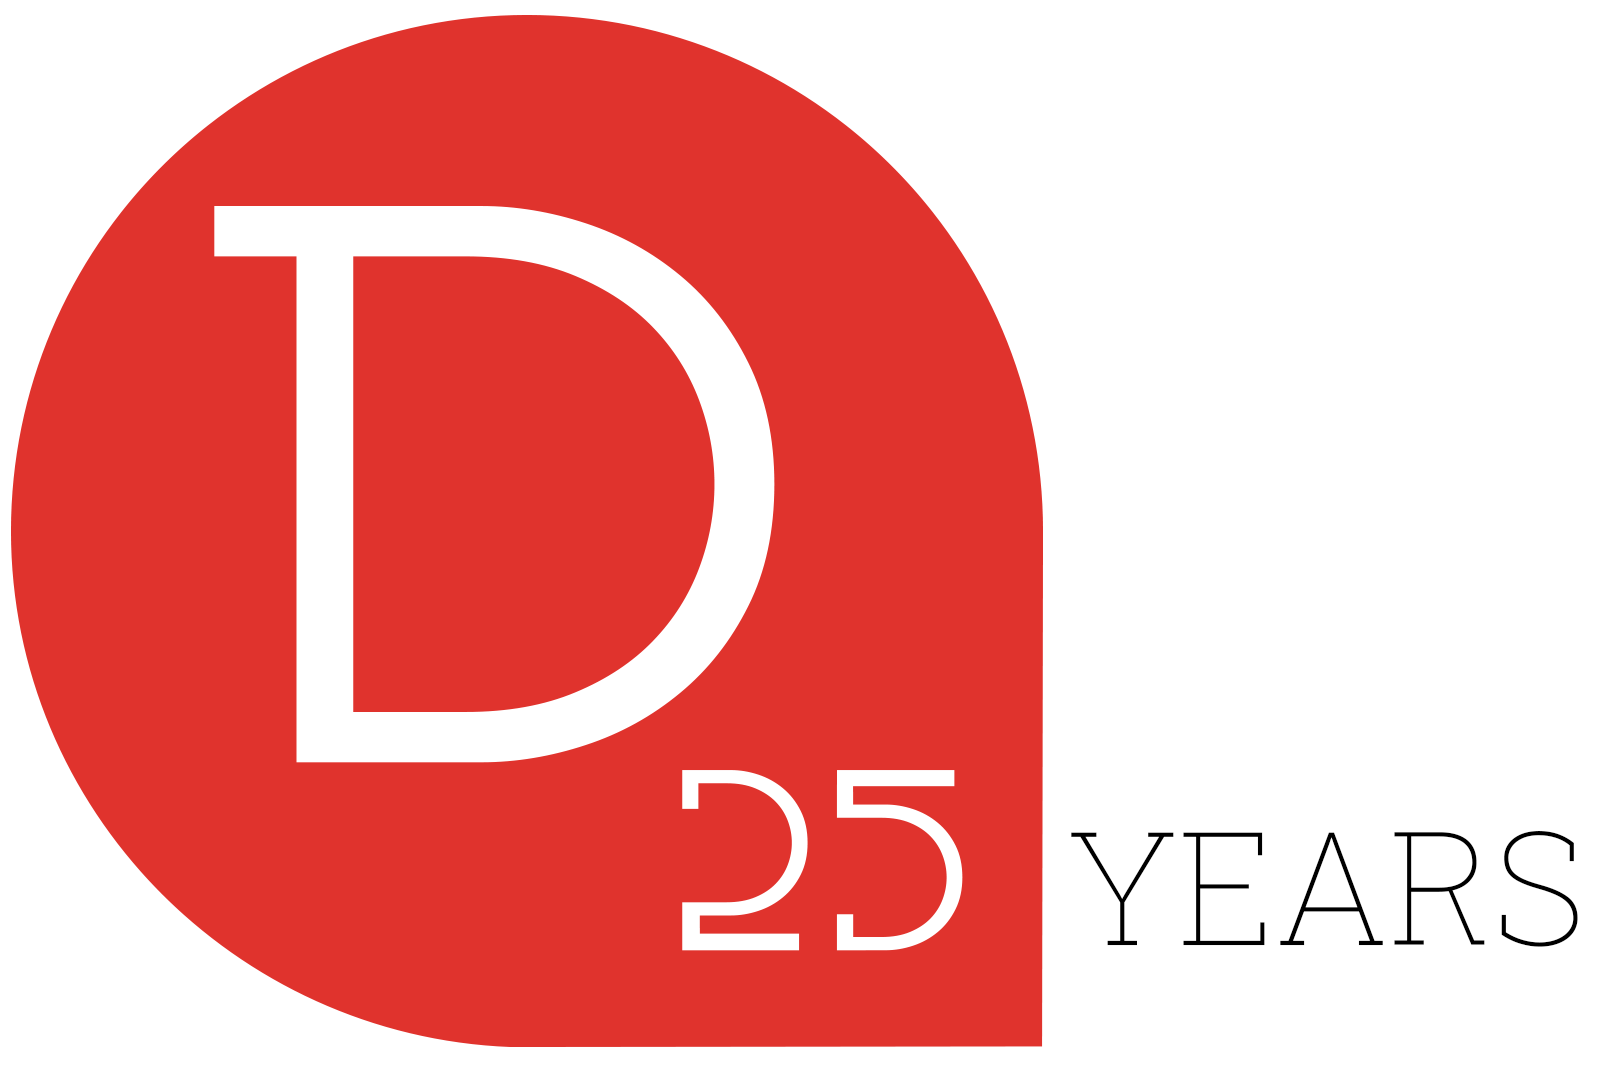 DLS Design 25th anniversary logo.